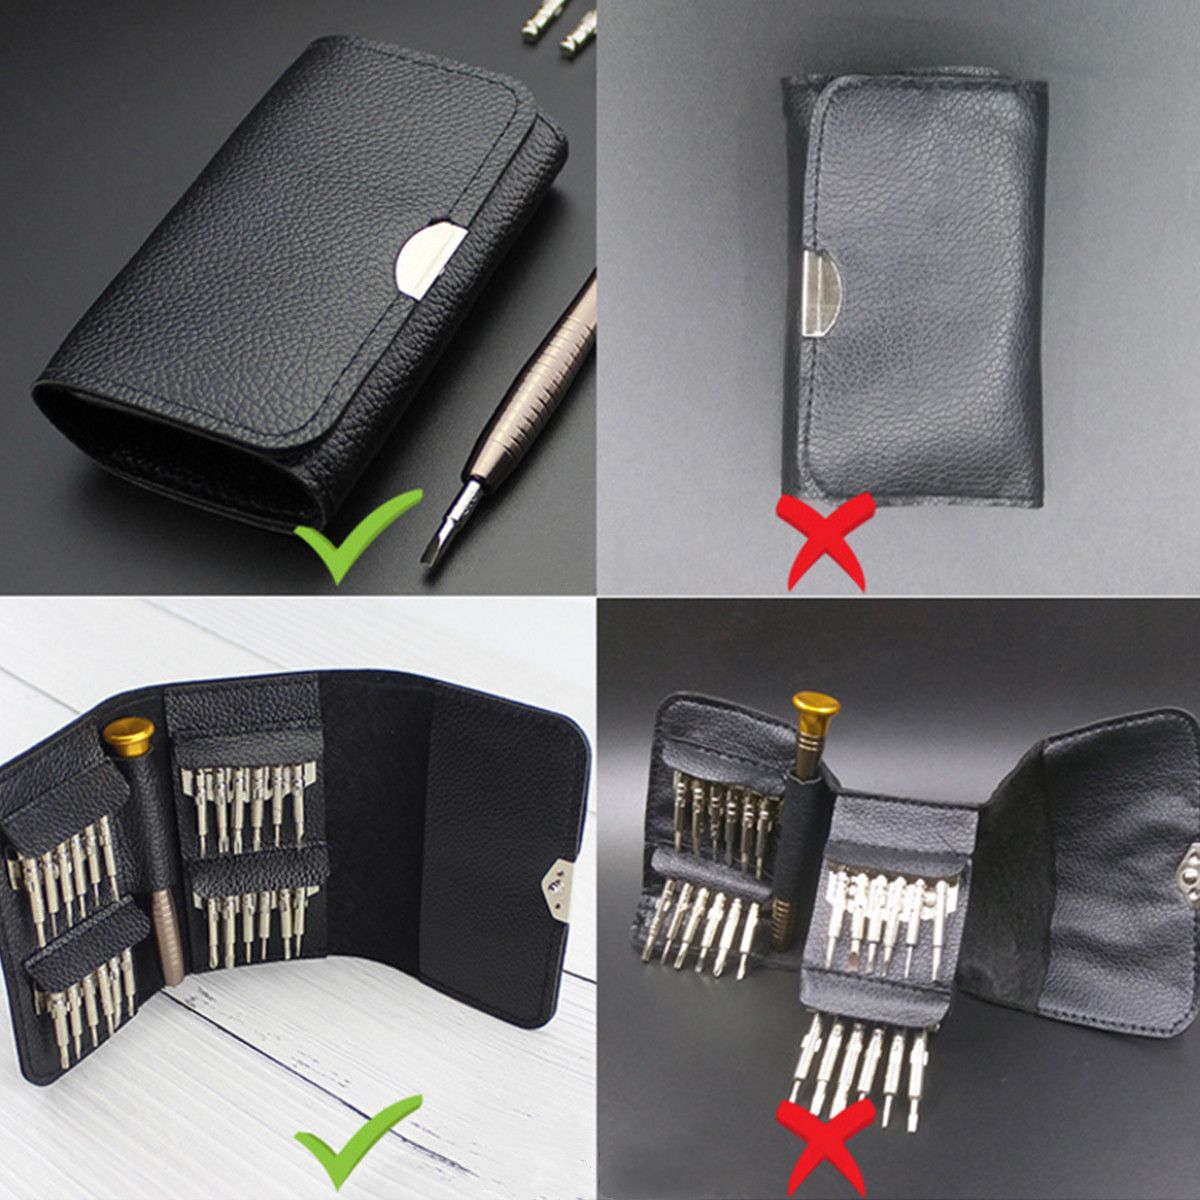 25-In-1-Multifunctional-Precision-Leather-Case-Manual-Screwdriver-Bit-Set-Computer-Pad-Phone-Laptop--1714685